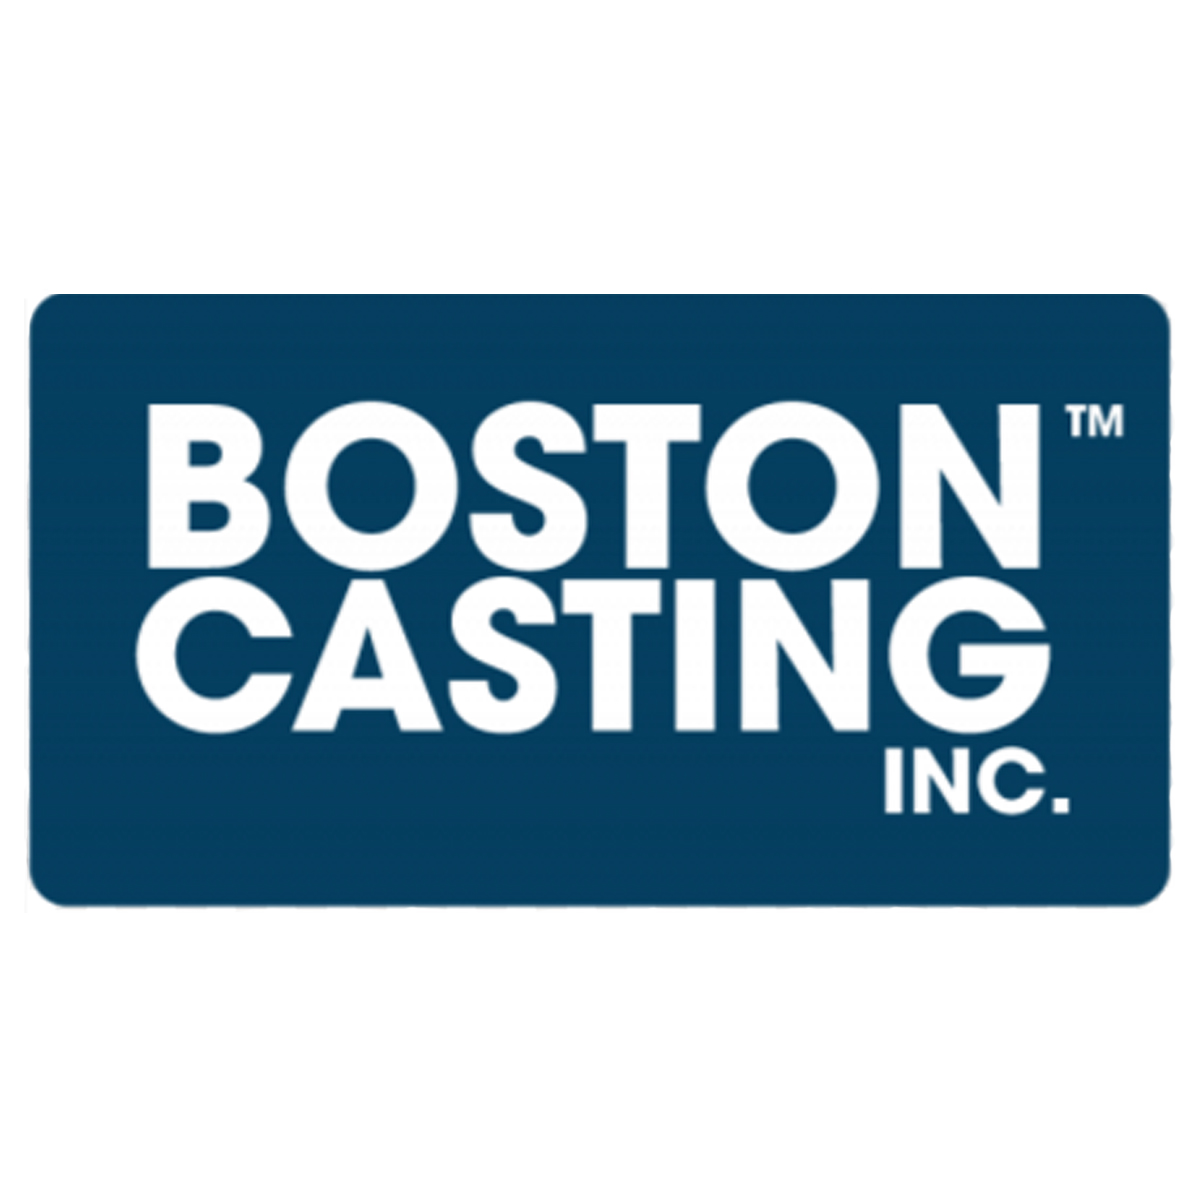 Boston CASting Sq.jpg